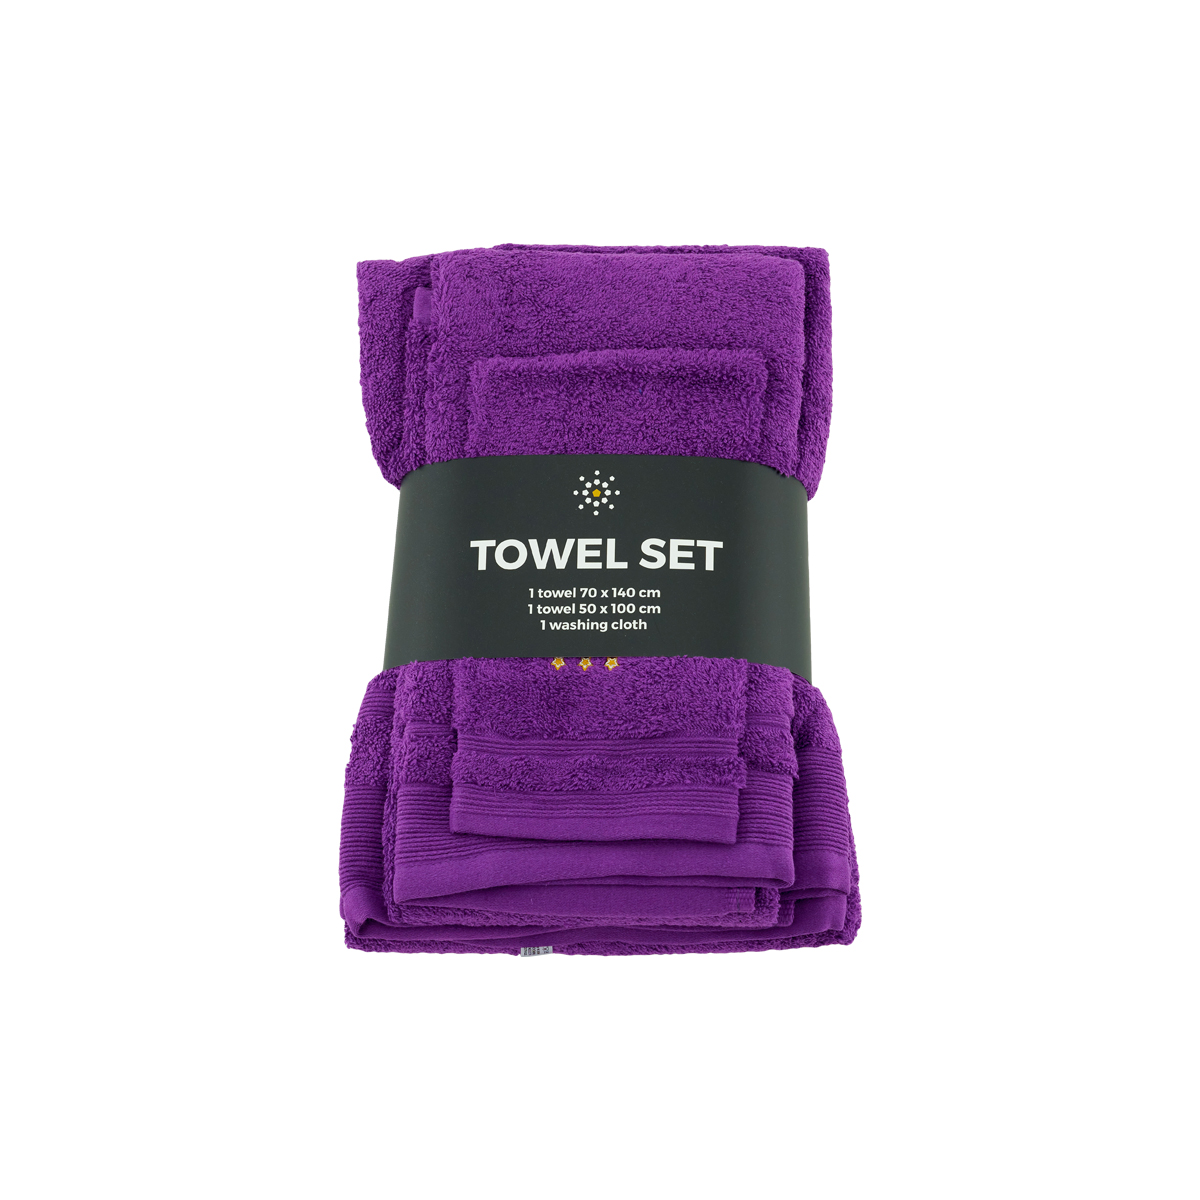 Towel Set - Purple is-hover